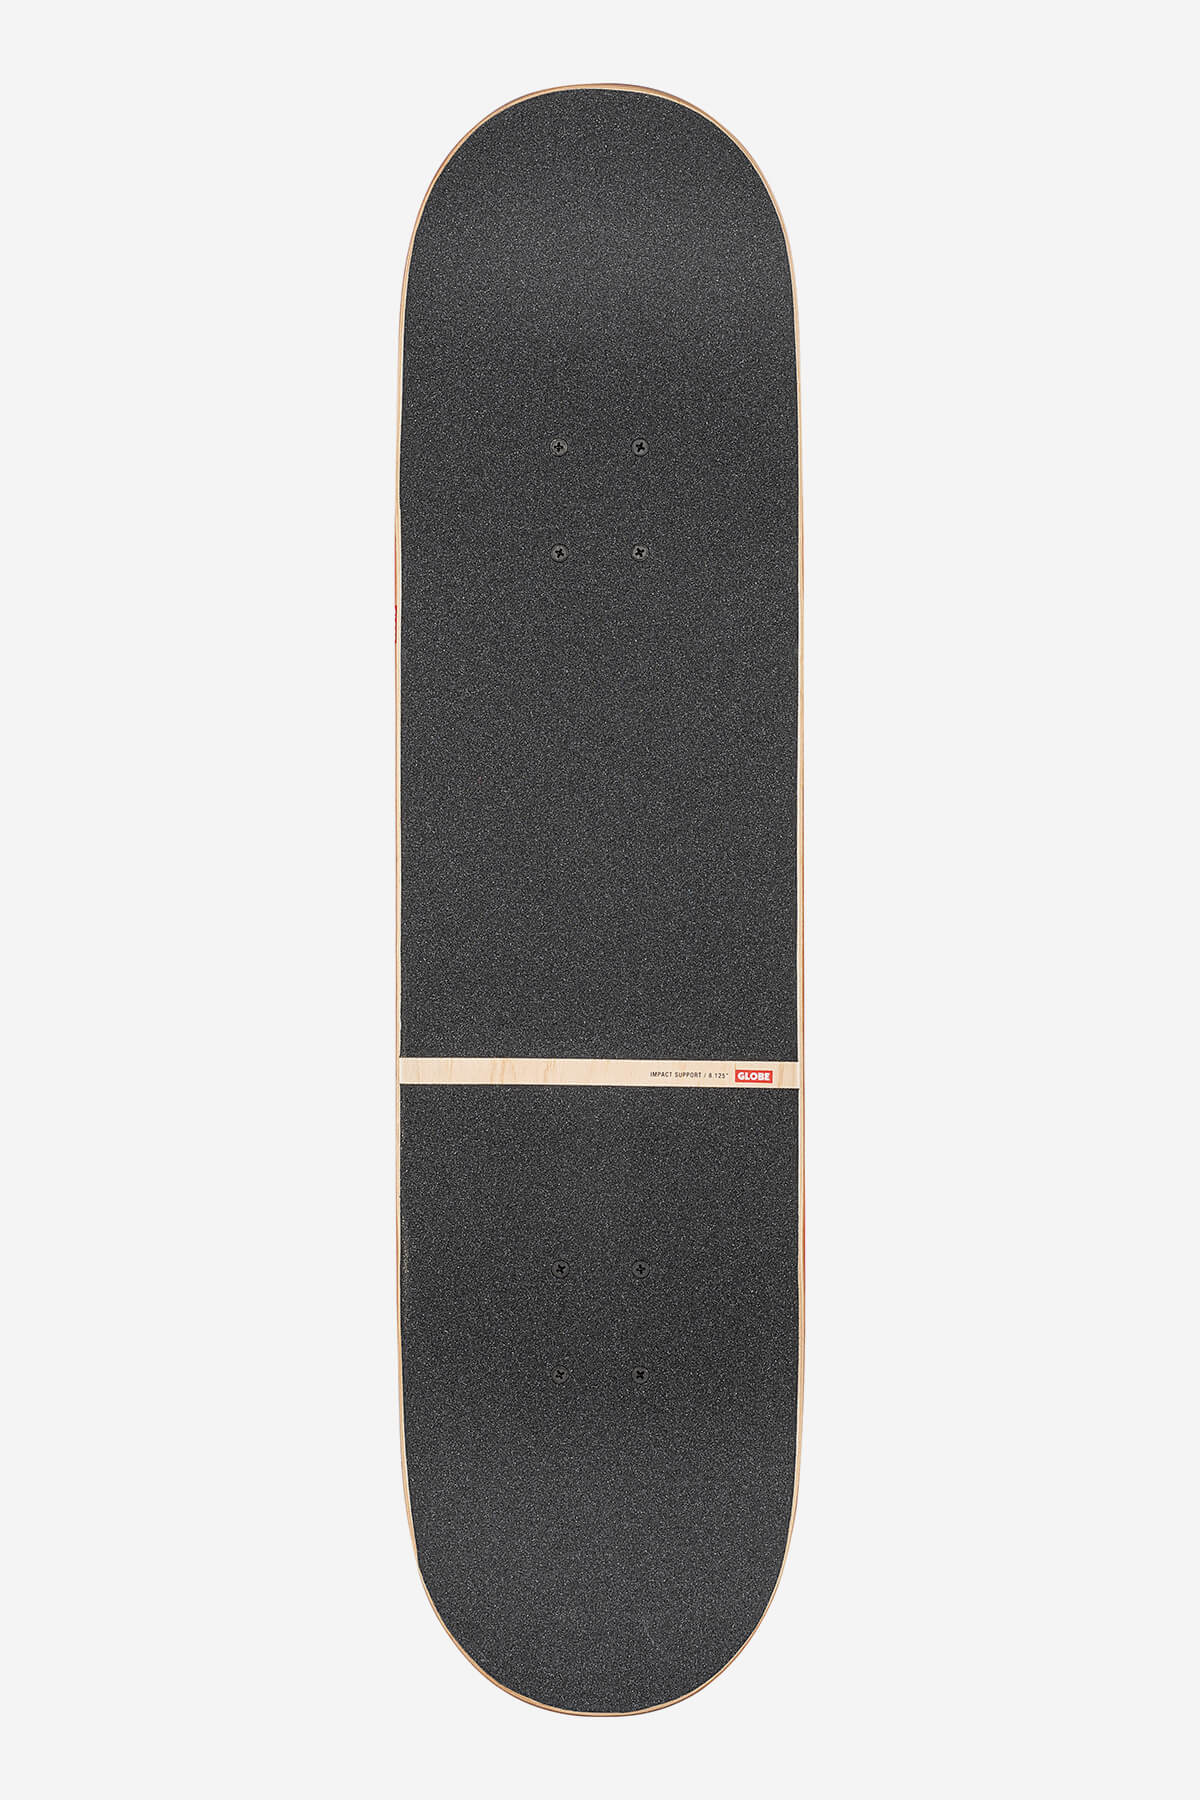 g3 bar impact nebula 8.125" complete skateboard